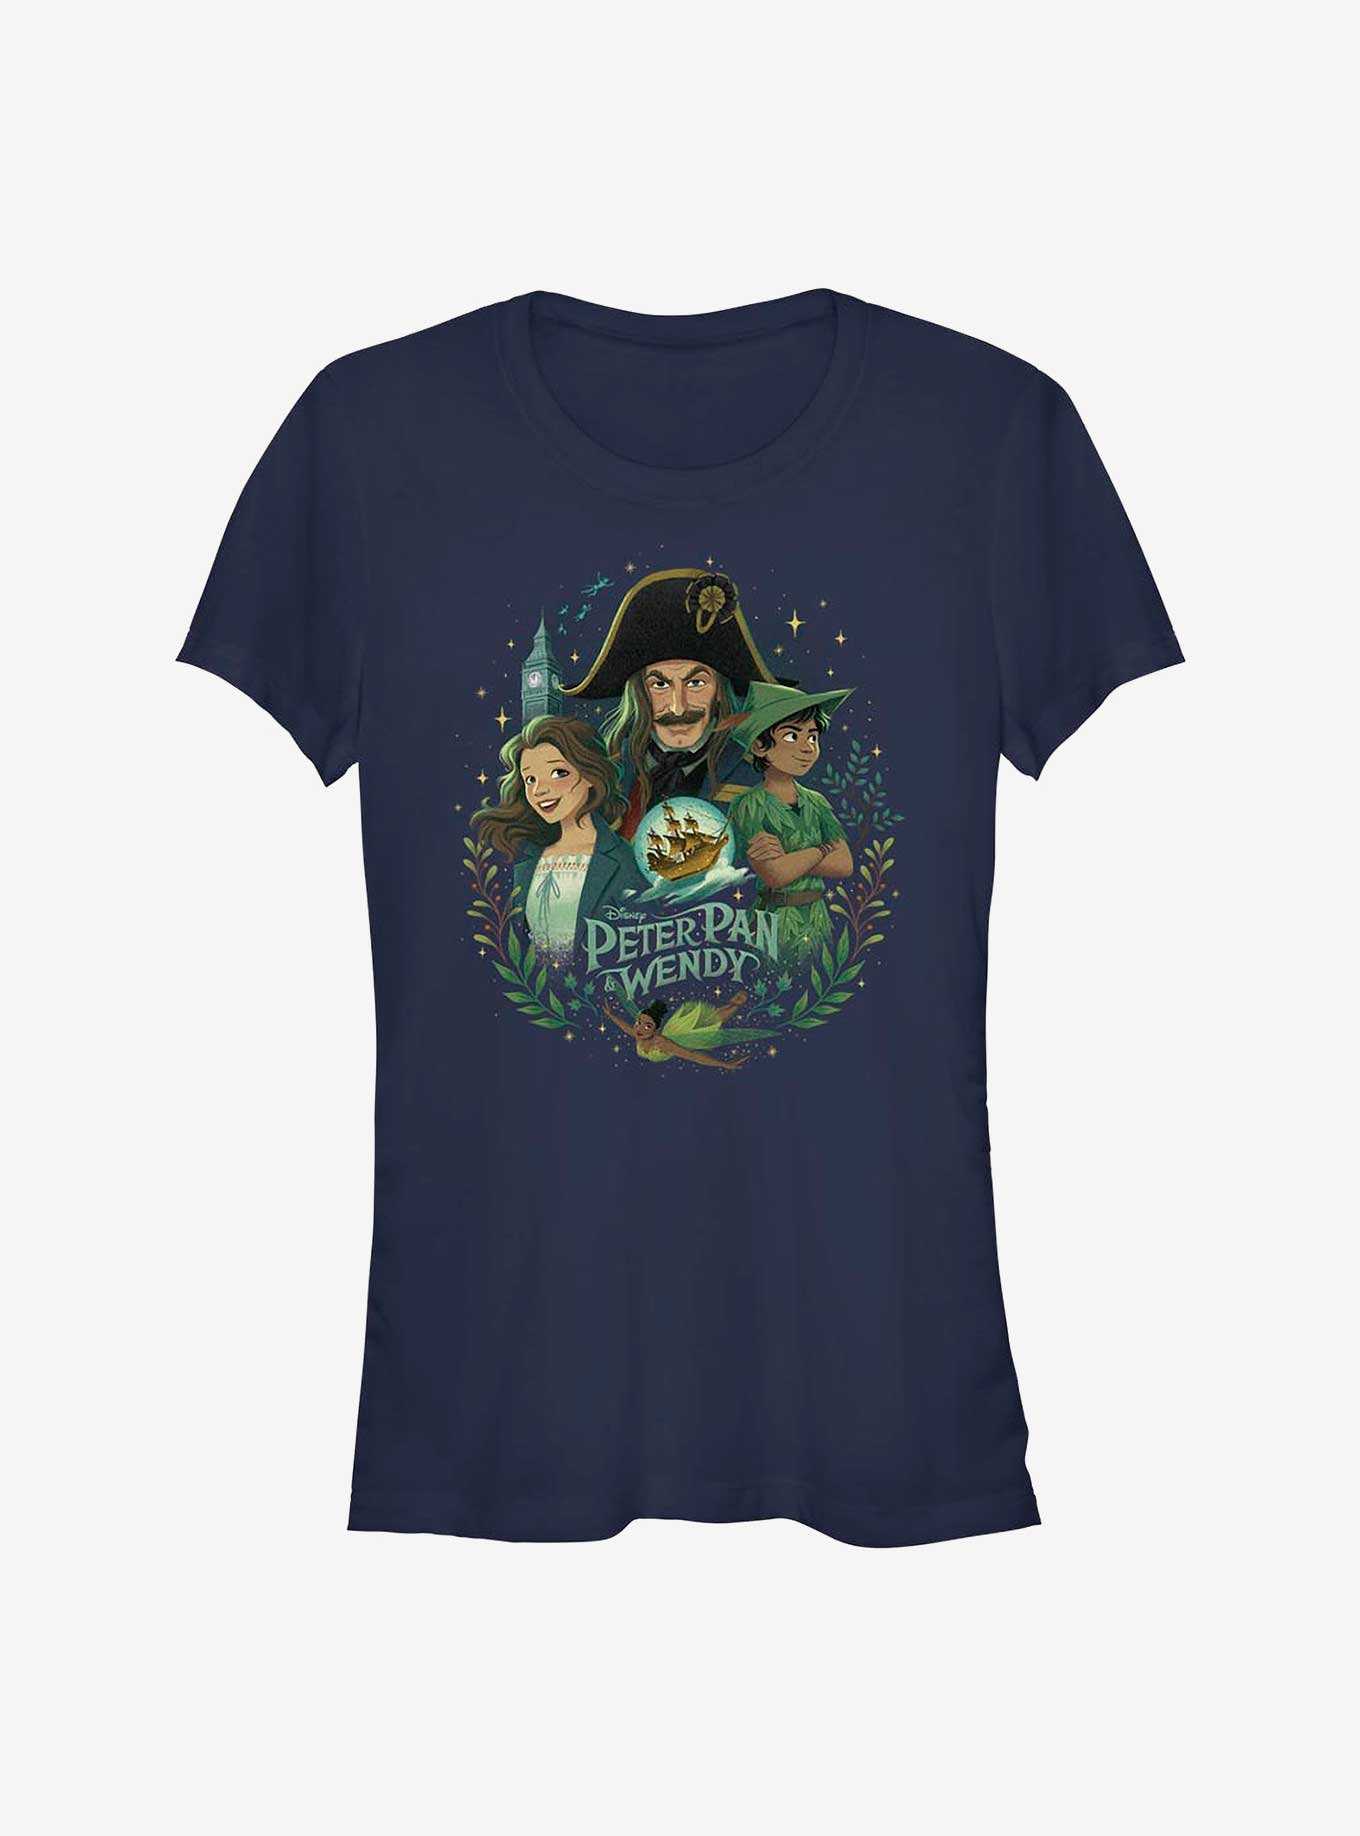 Disney Peter Pan & Wendy Neverland Group Girls T-Shirt, , hi-res